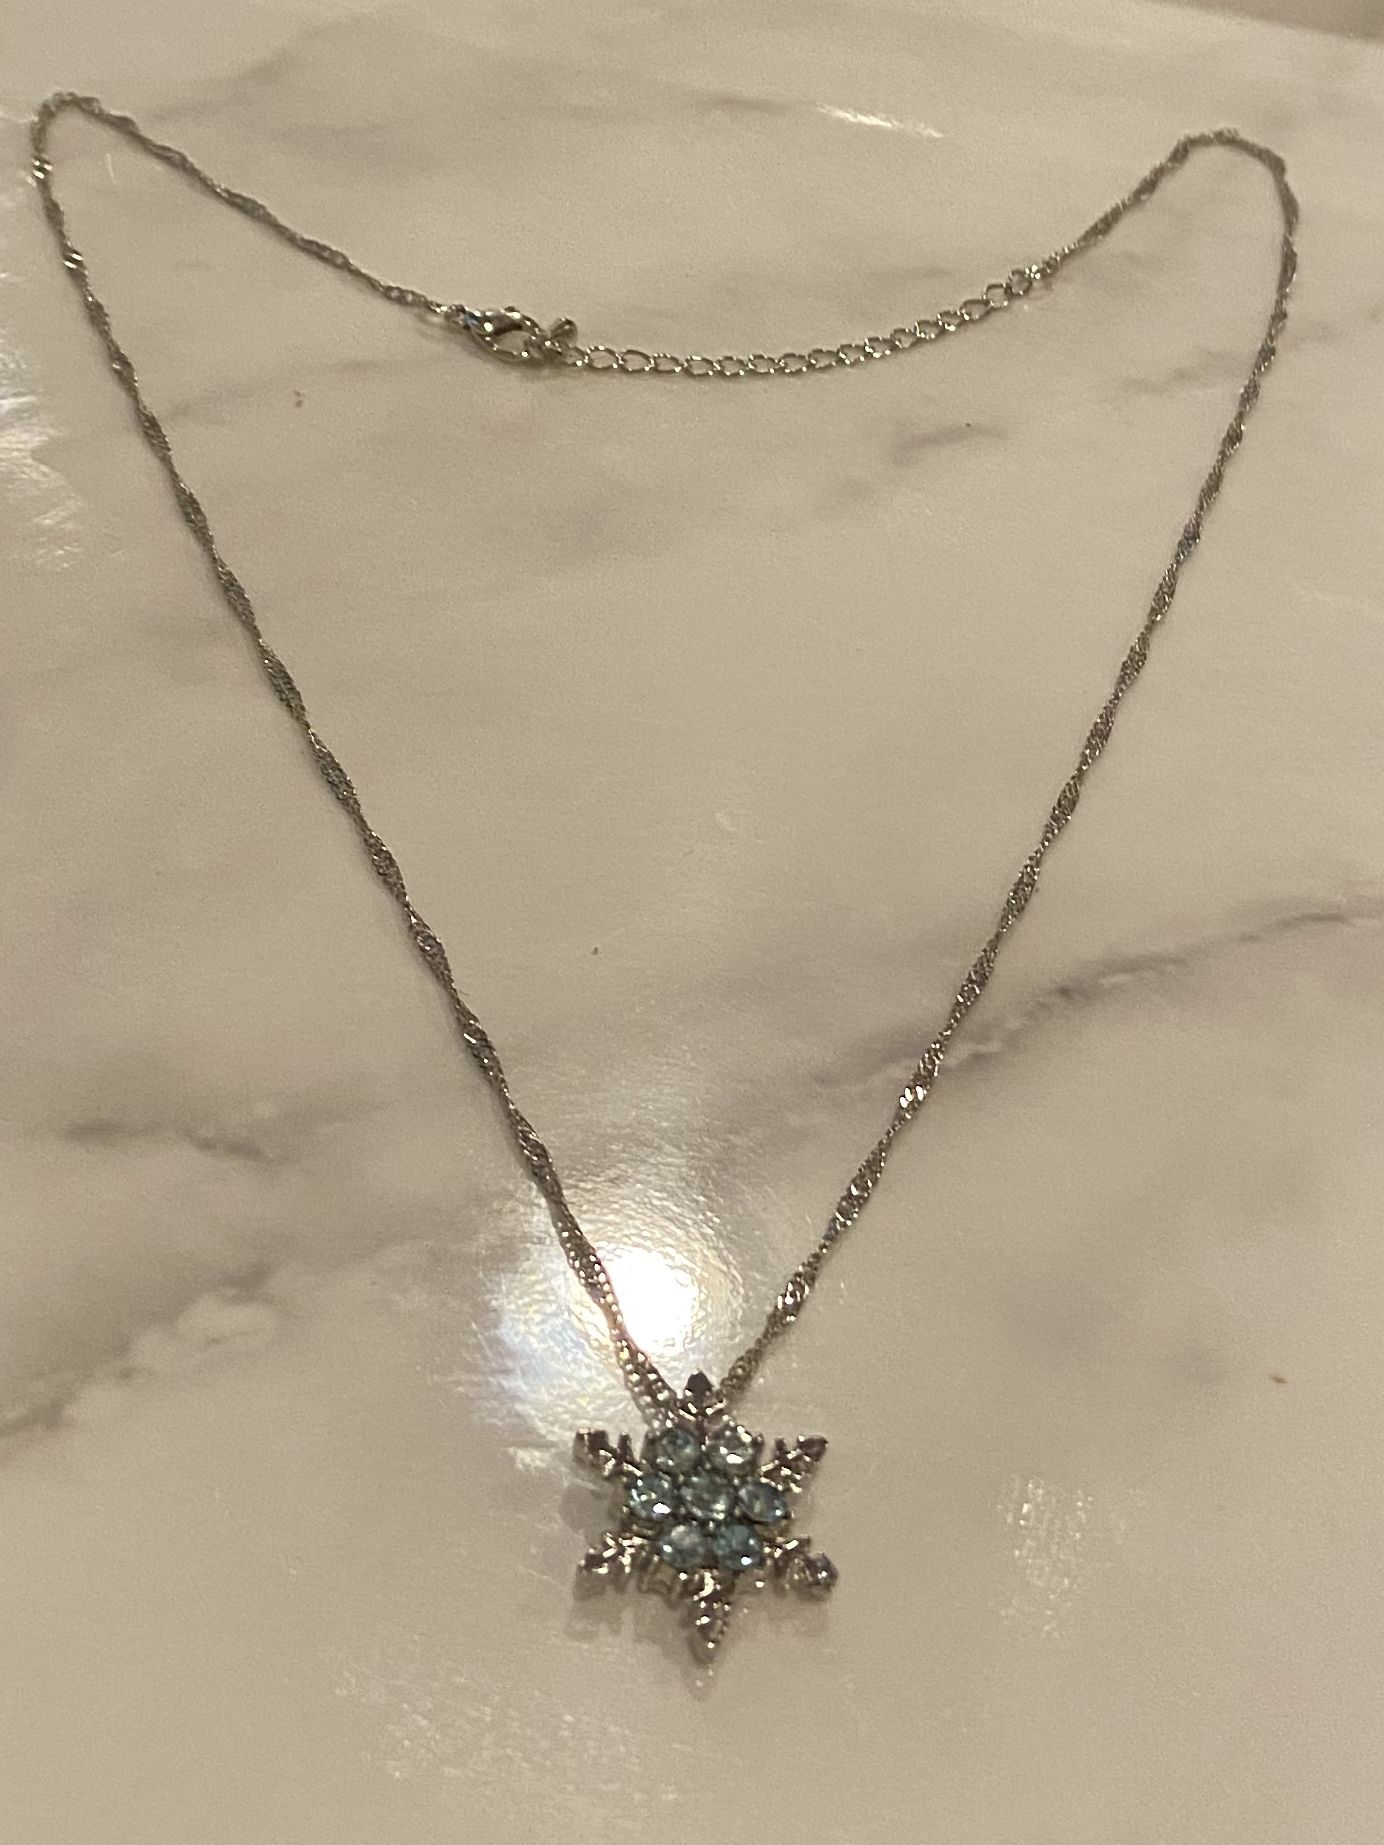 Aqua marine snow flake necklace